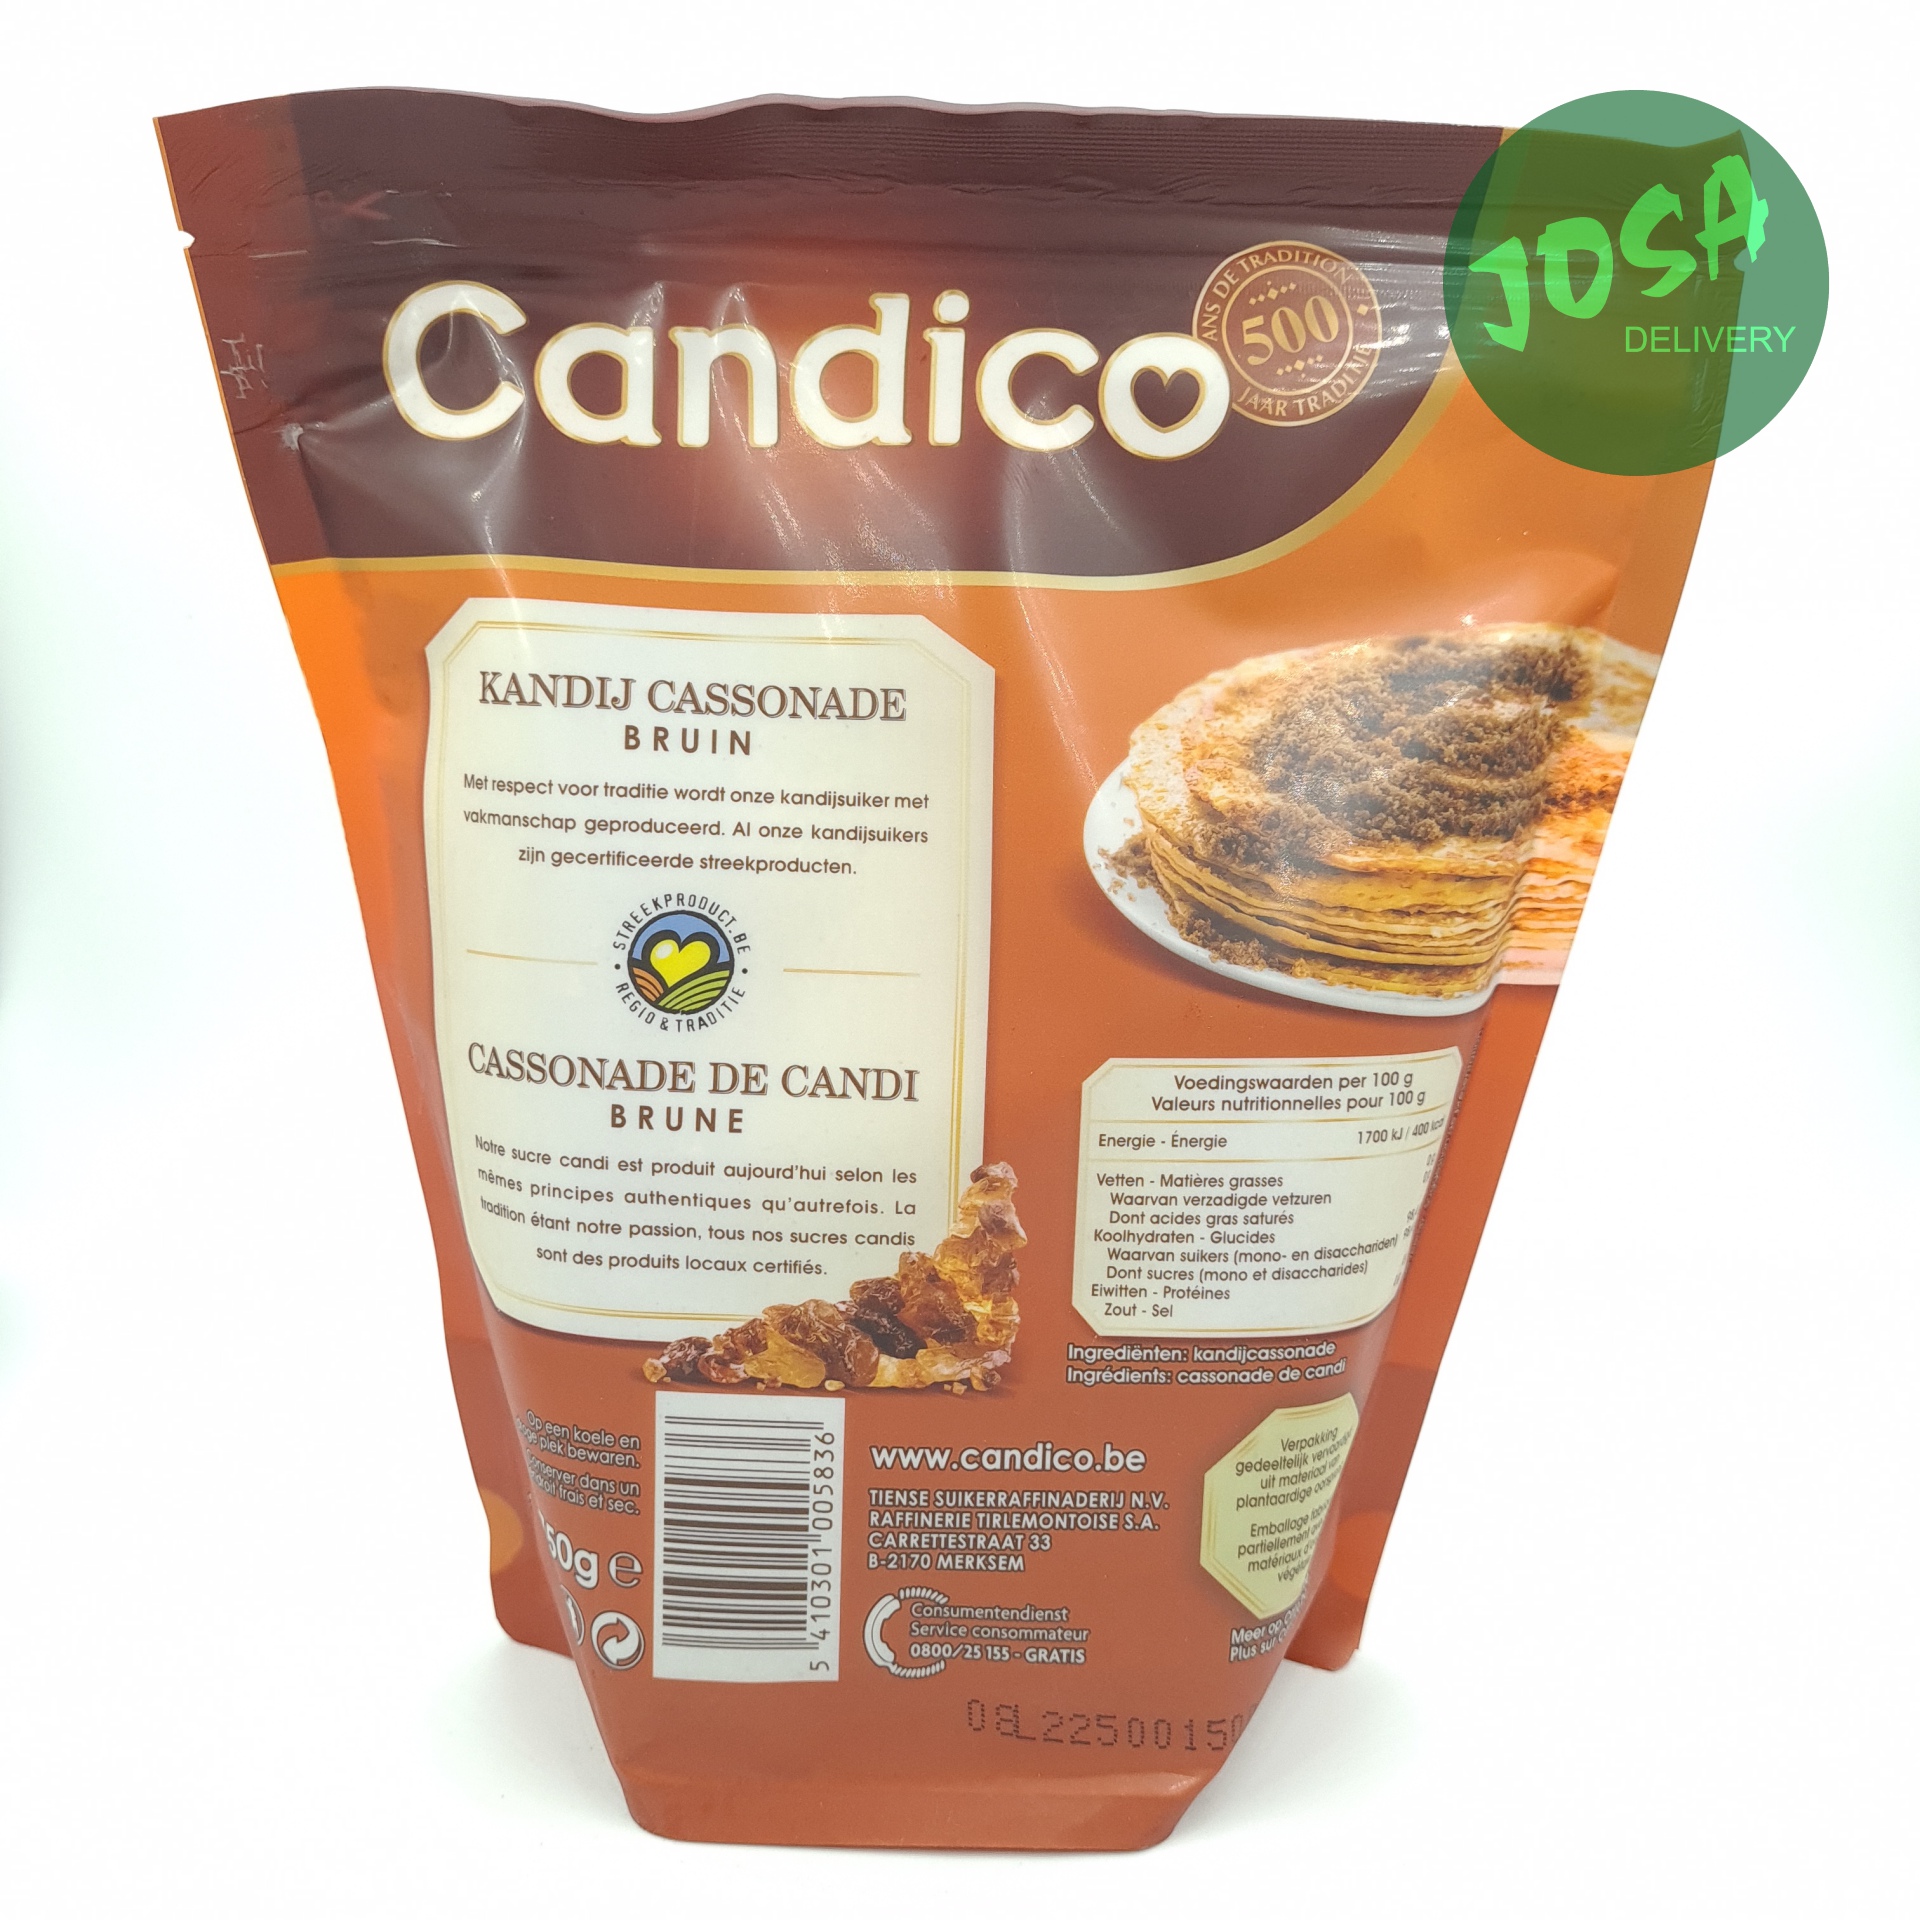 Cassonade de candi brune - Candico - 1 kg